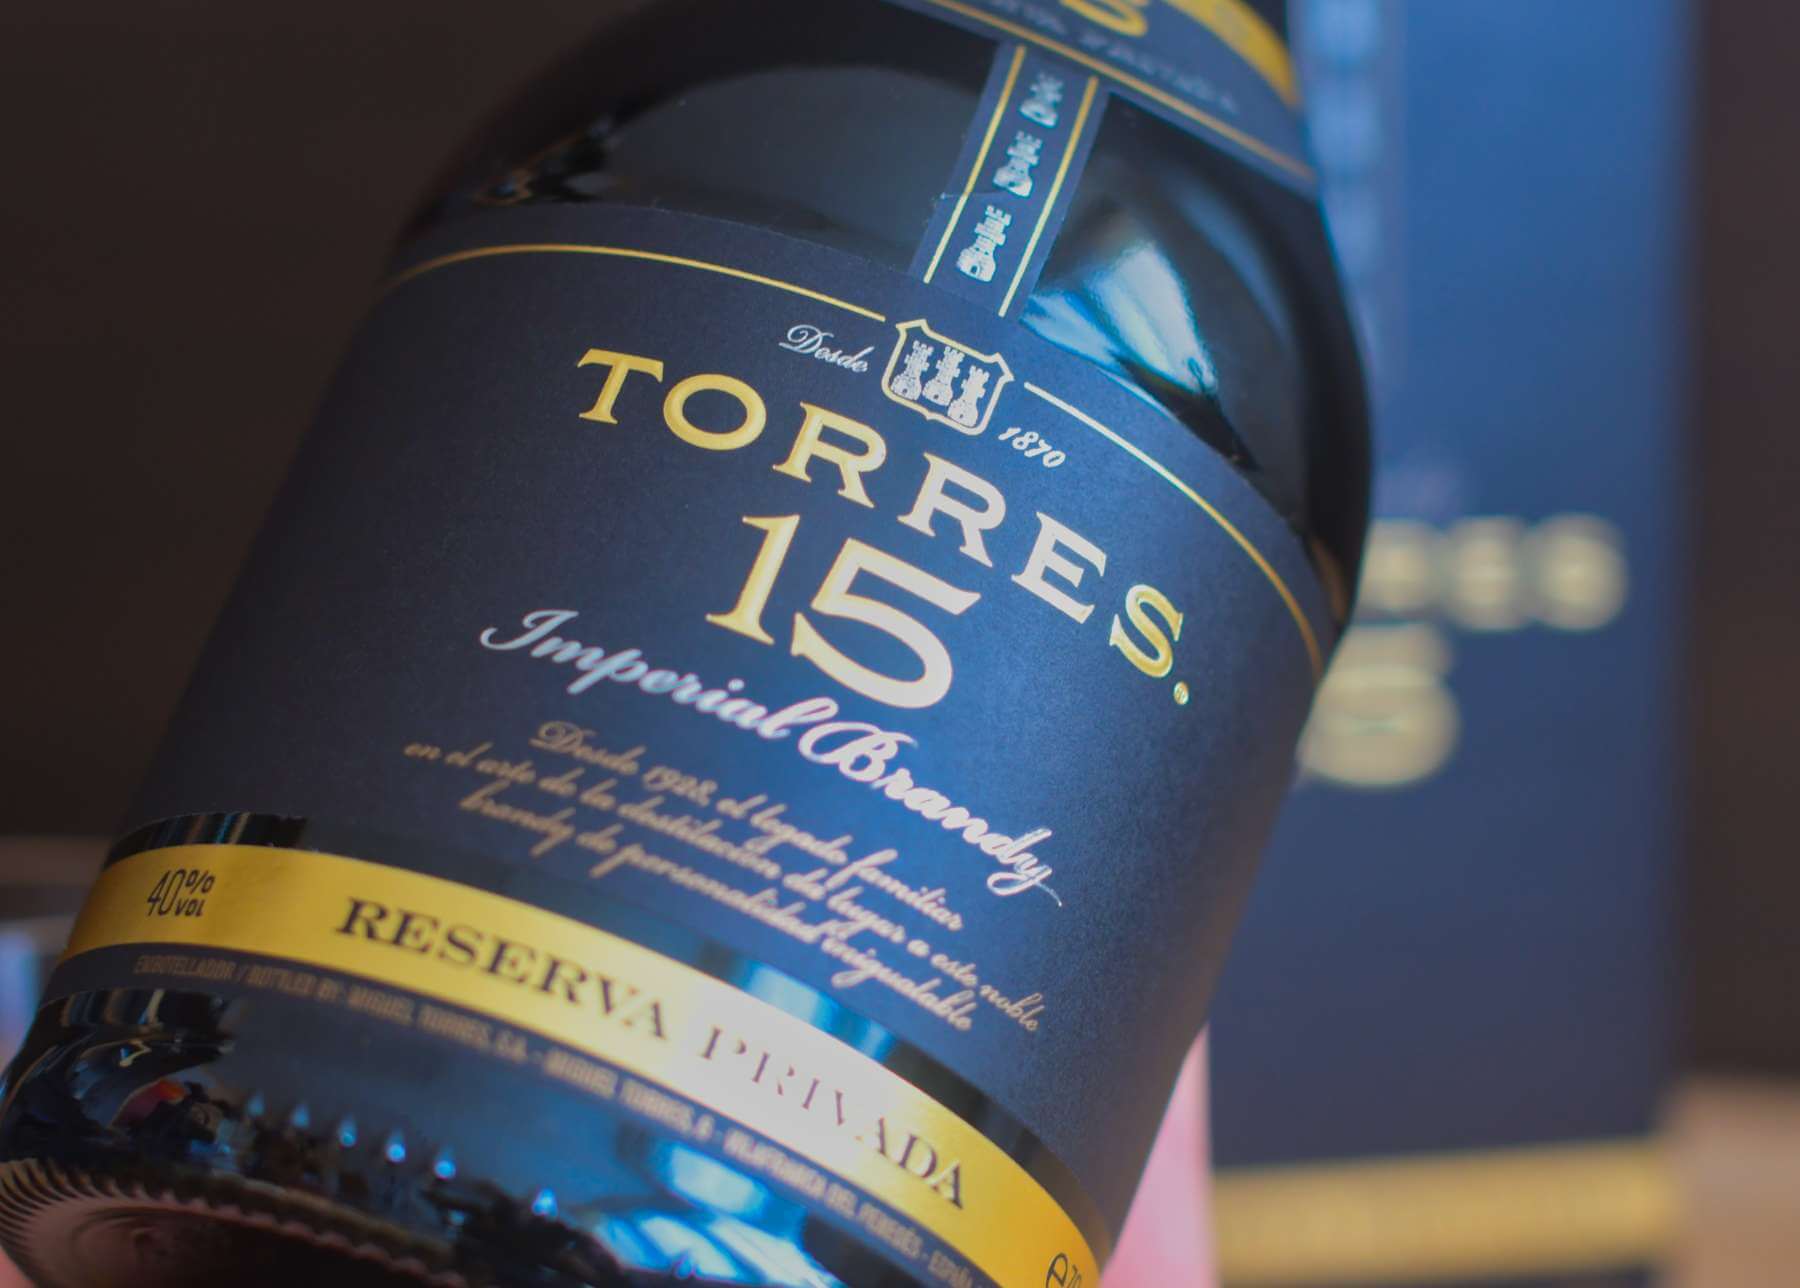 Torres 15 Brandy – Reserva Privada – Tasting Review